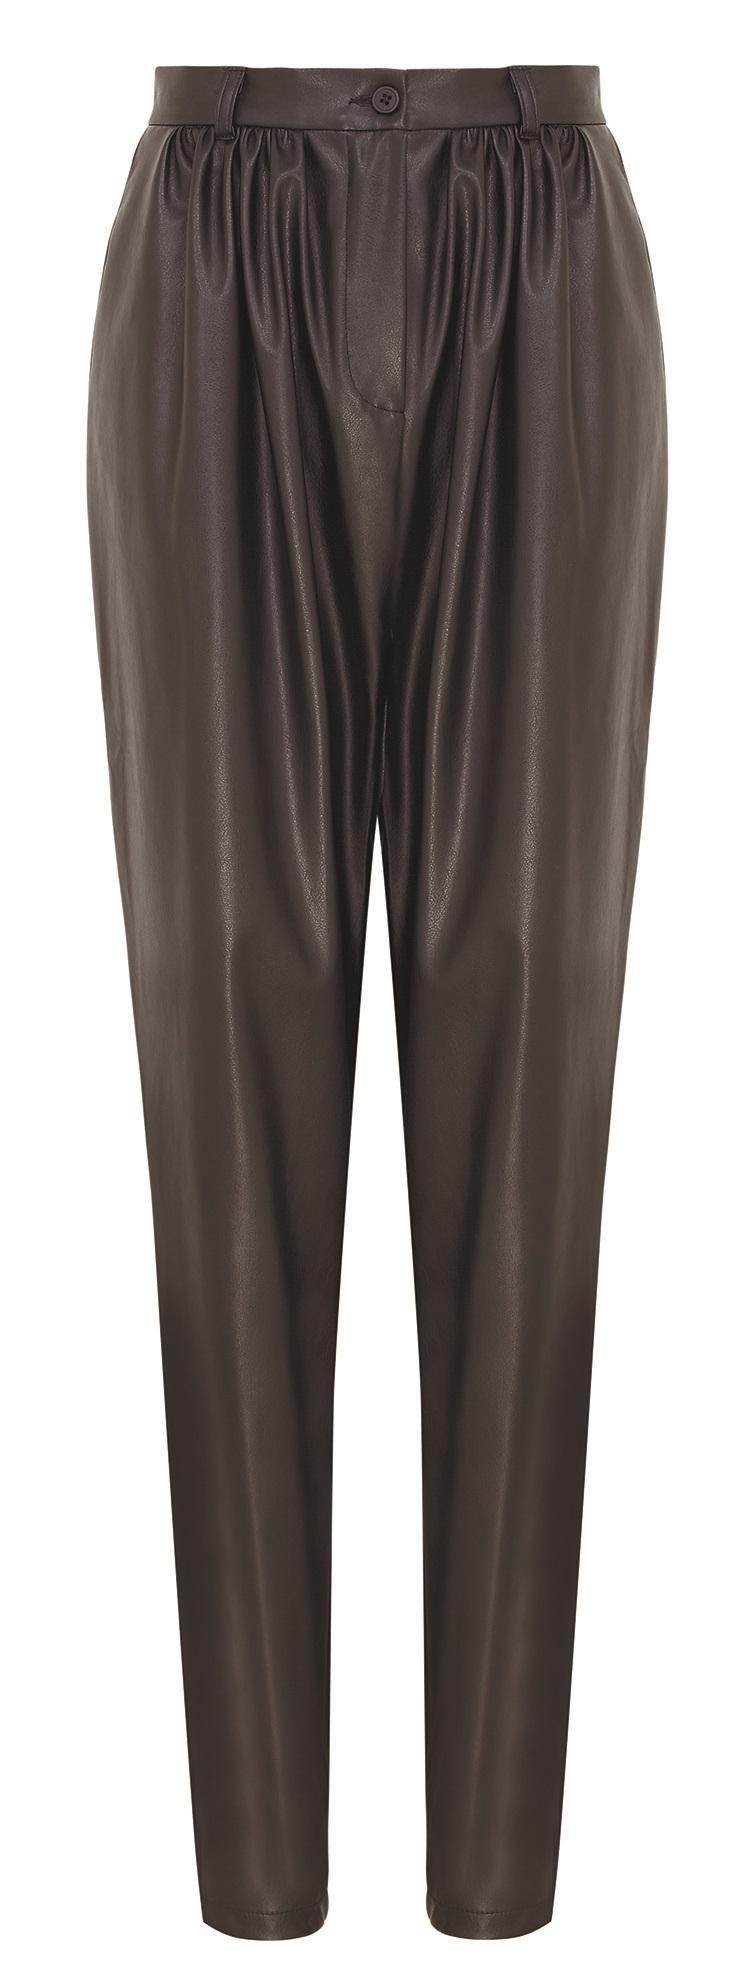 La Redoute, Faux Leather Trousers, £79